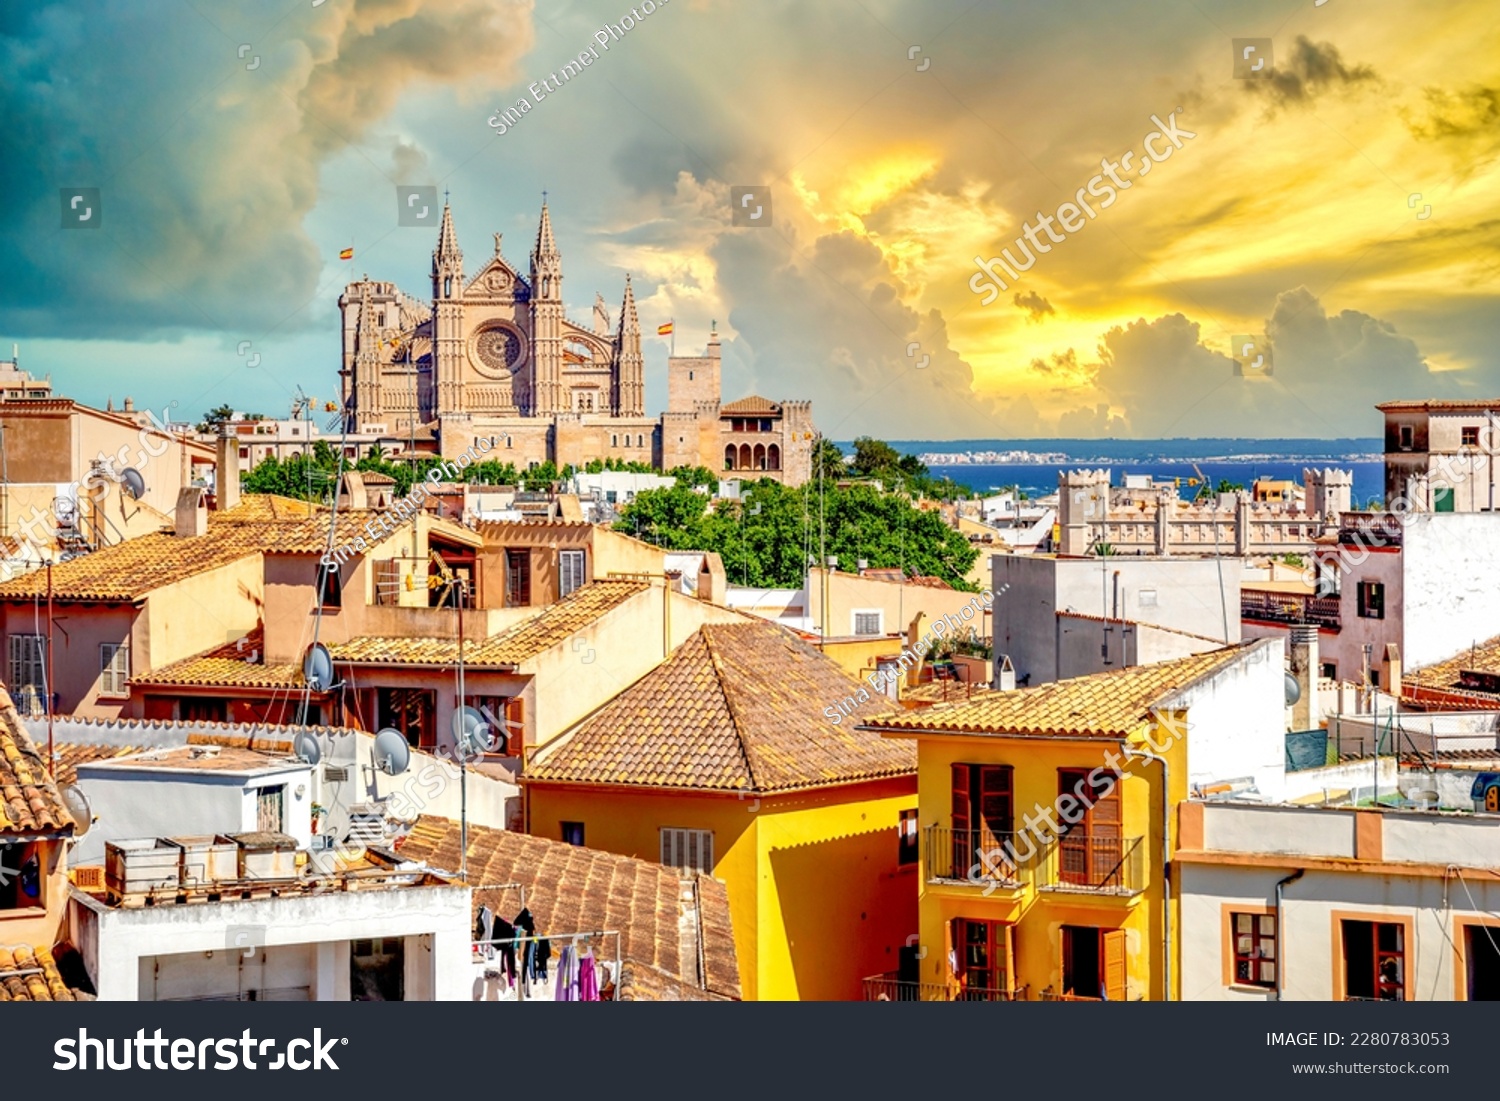 Cathedral of Palma de Mallorca, Spain  #2280783053